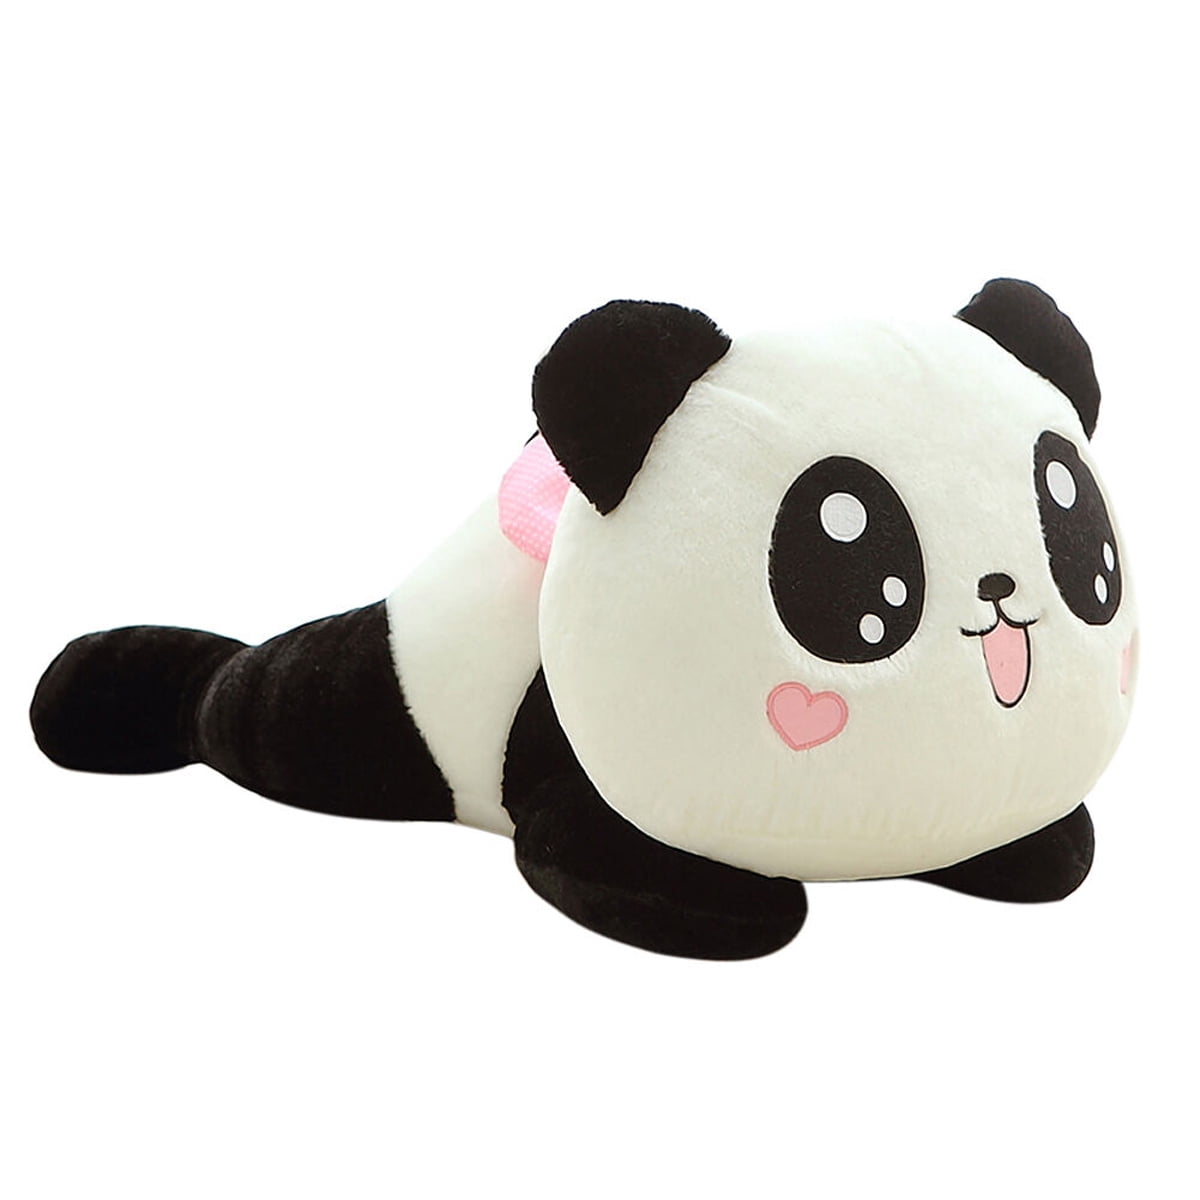 Cute Standing PANDA BEAR Stuffed Animal Plush Soft Toy Pillow Doll Cushion Gift 